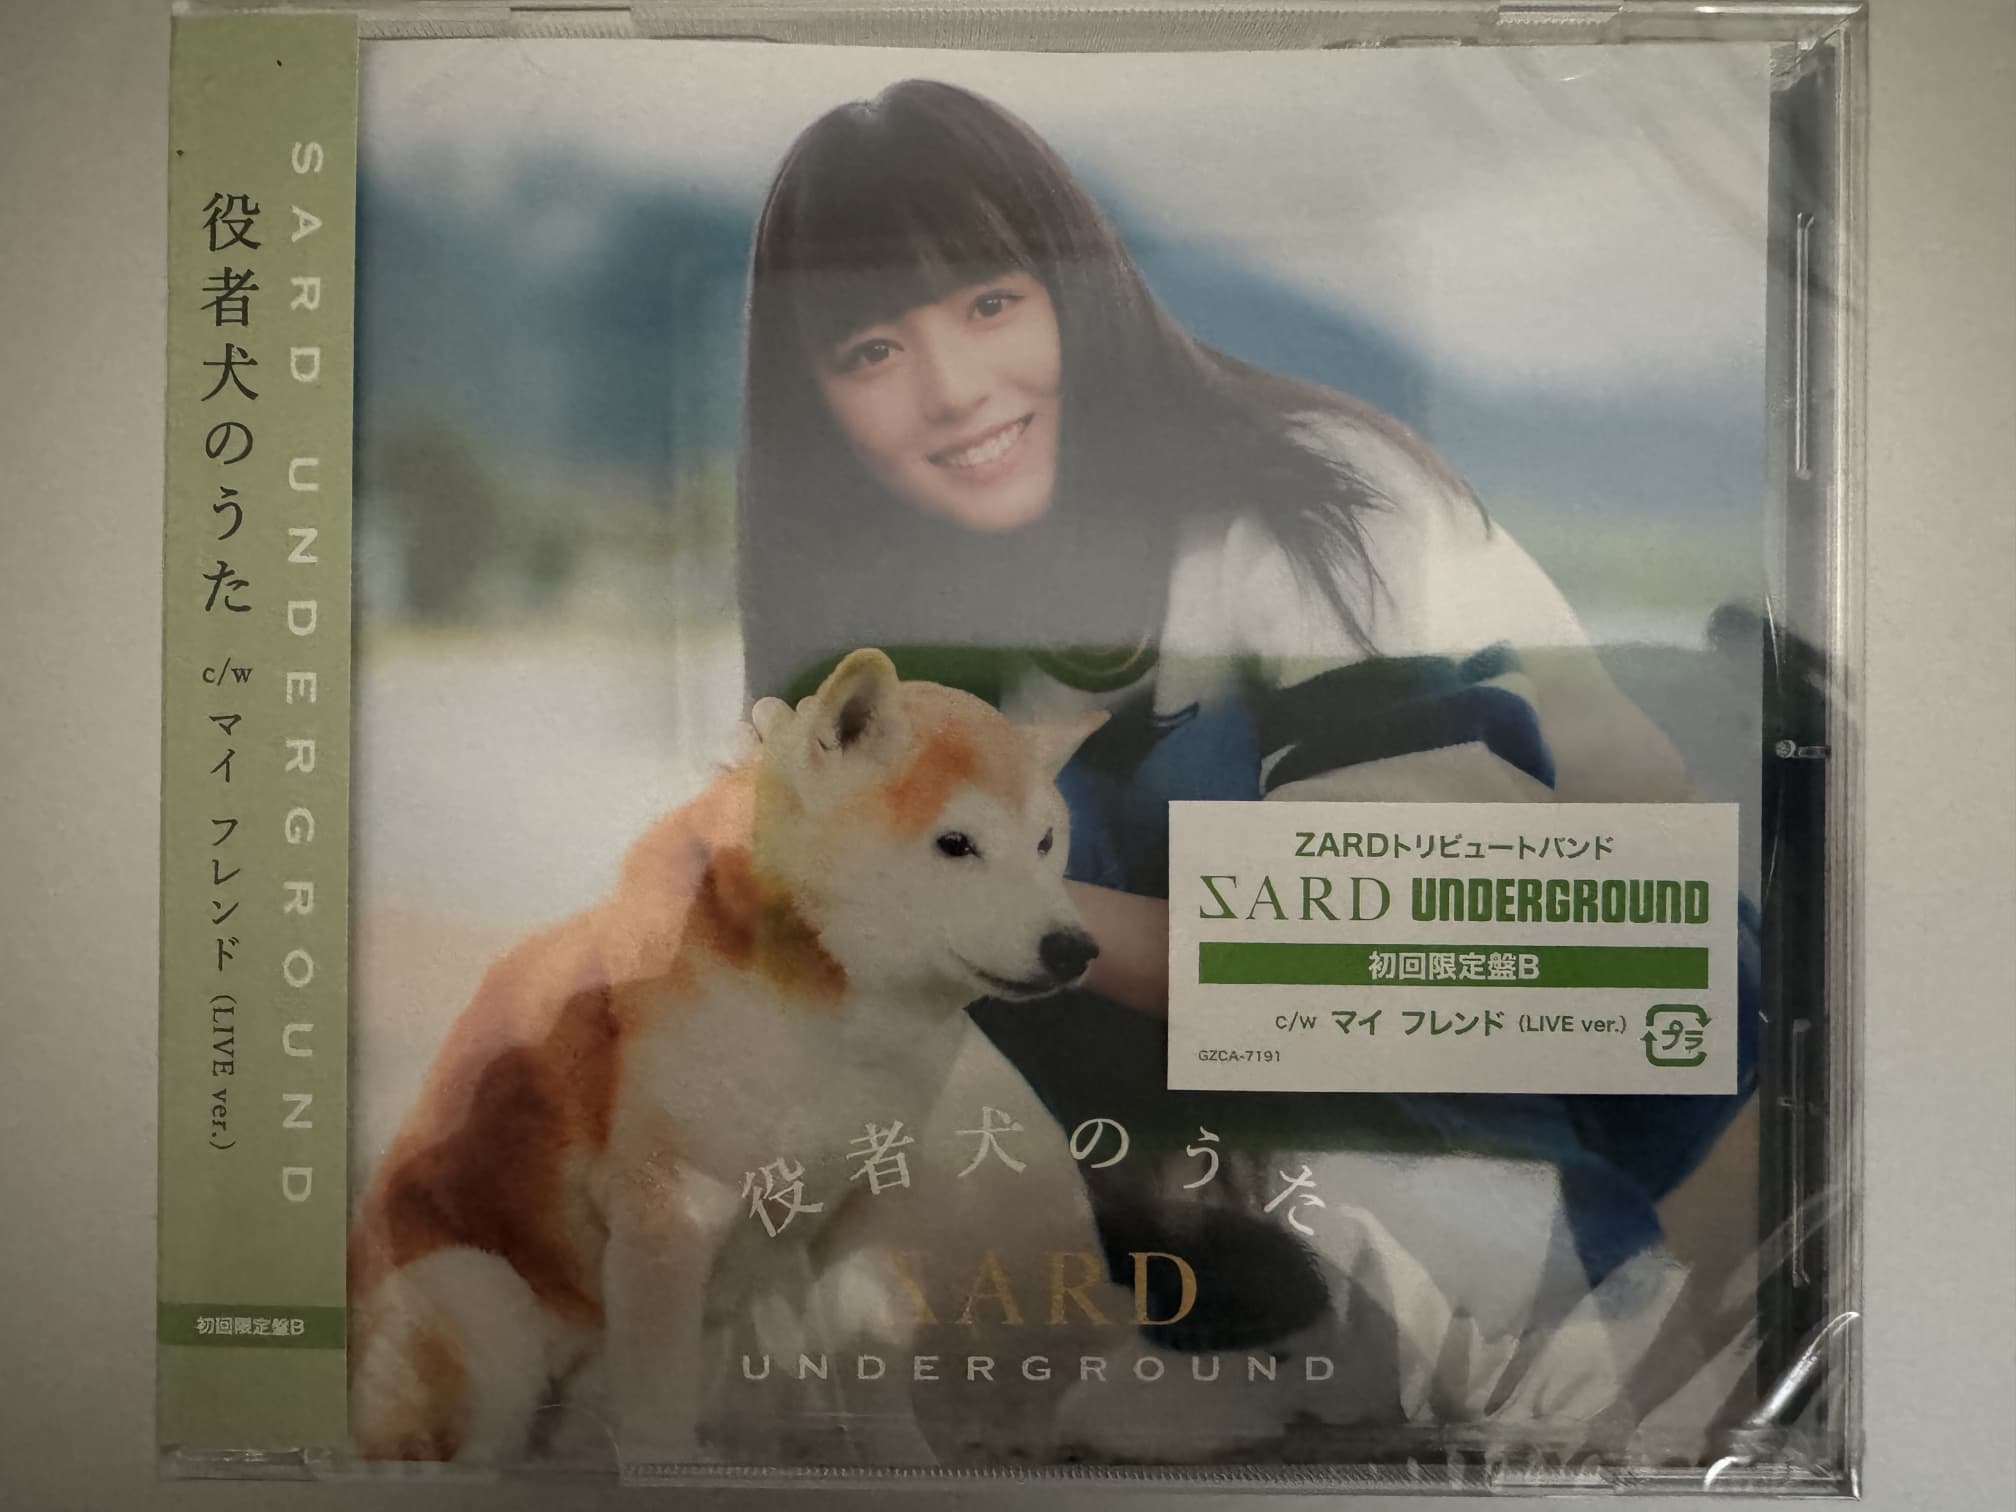 SARD UNDERGROUND 6th Single『役者犬のうた』を買ってみた | Hybrid